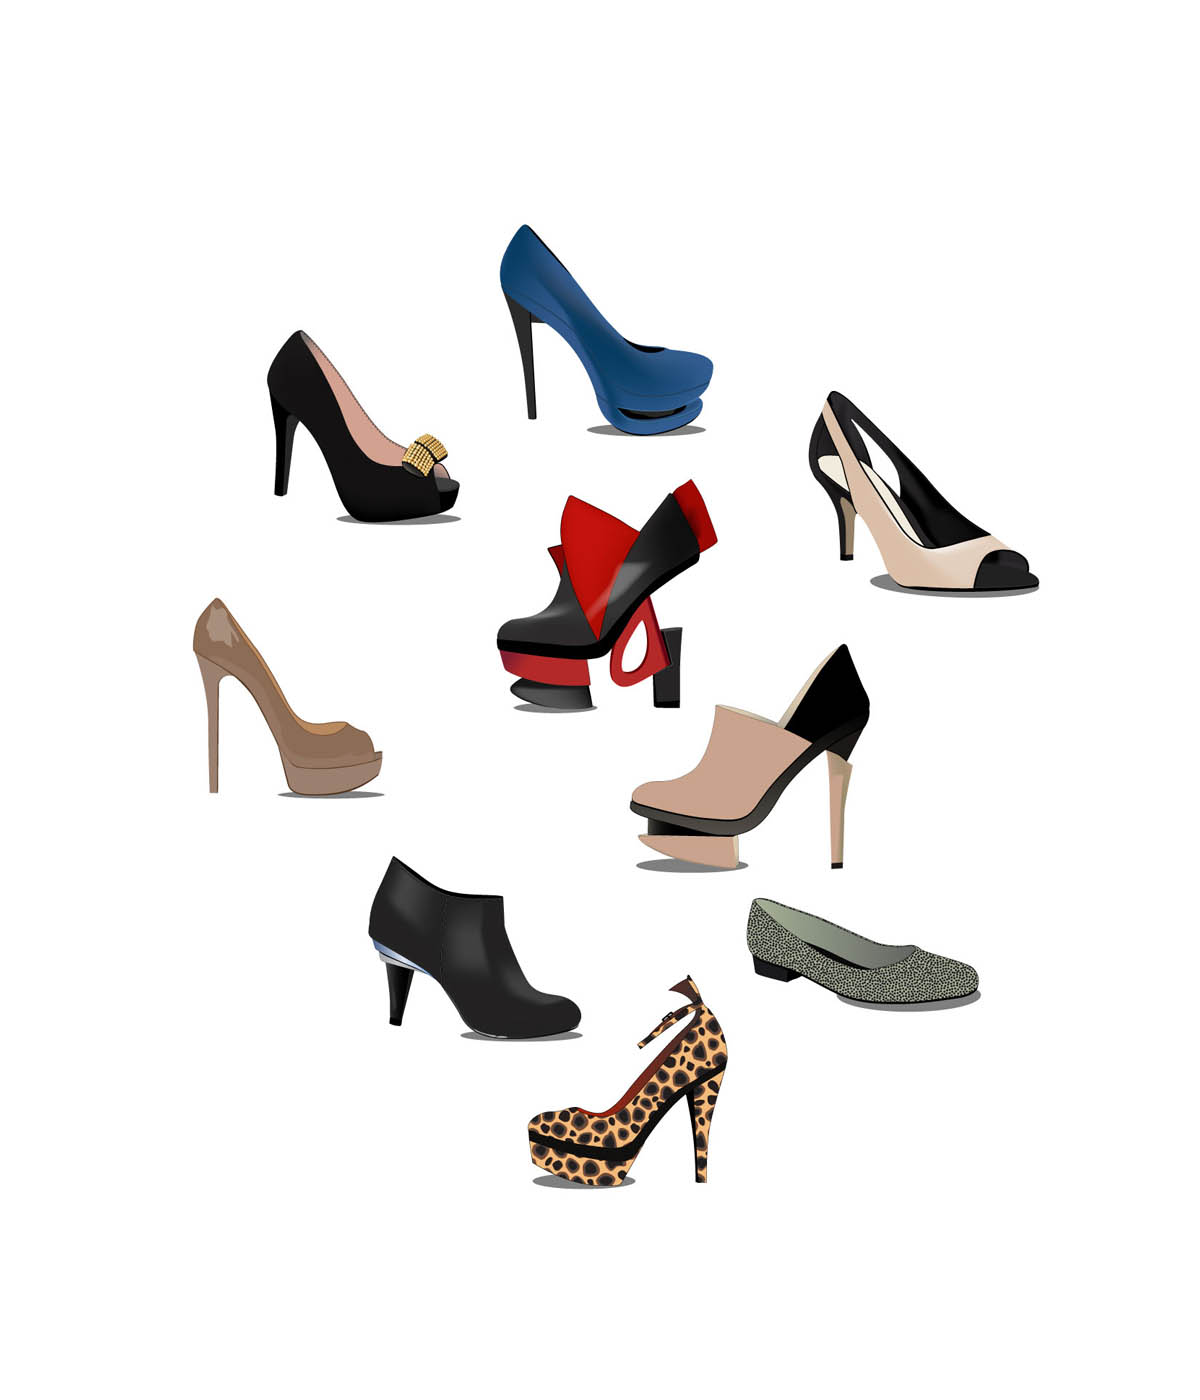 14 Women's Shoe Vectors Images